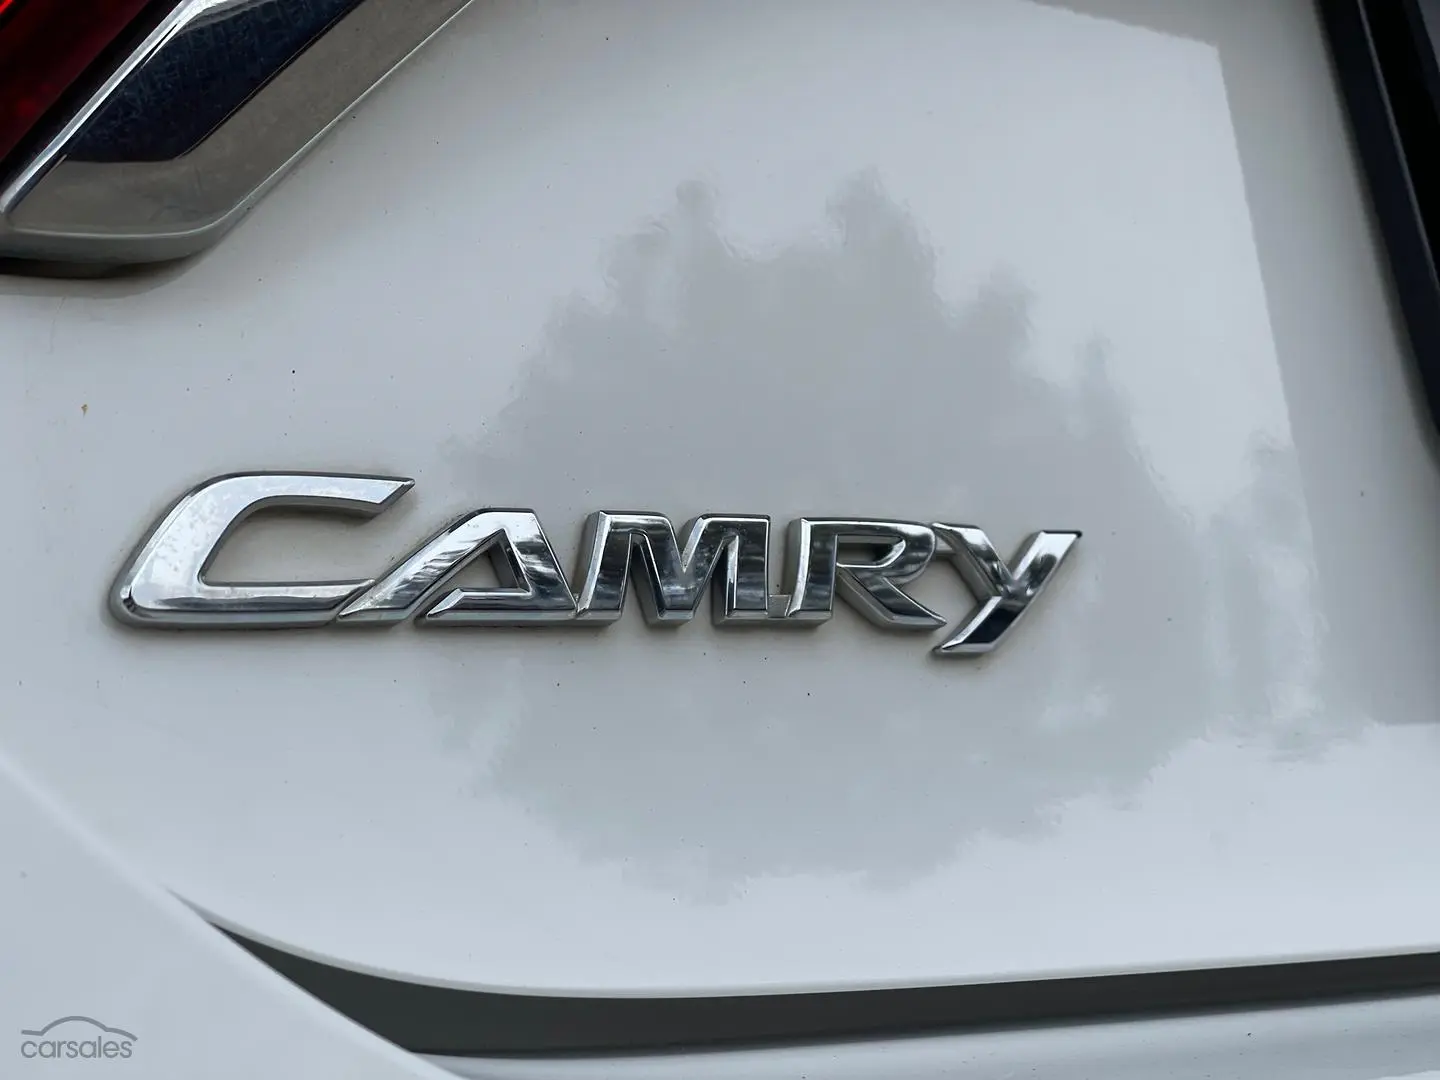 2017 Toyota Camry Image 27